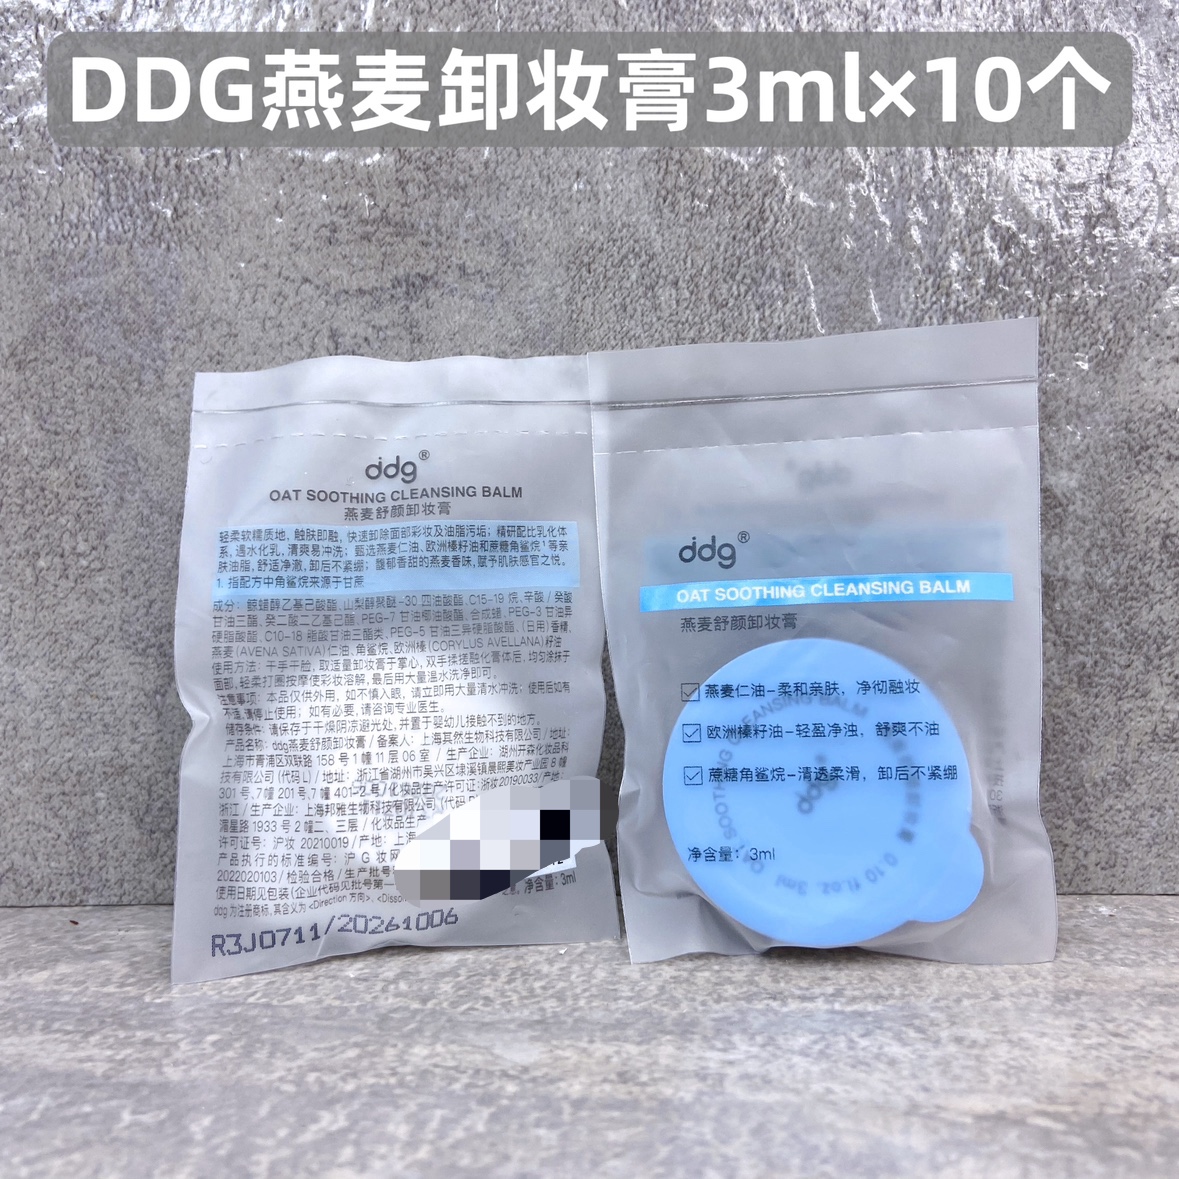 ddg511燕麦舒颜卸妆膏小样3ml×10颗温和清洁卸妆易乳化洗卸合一-图1